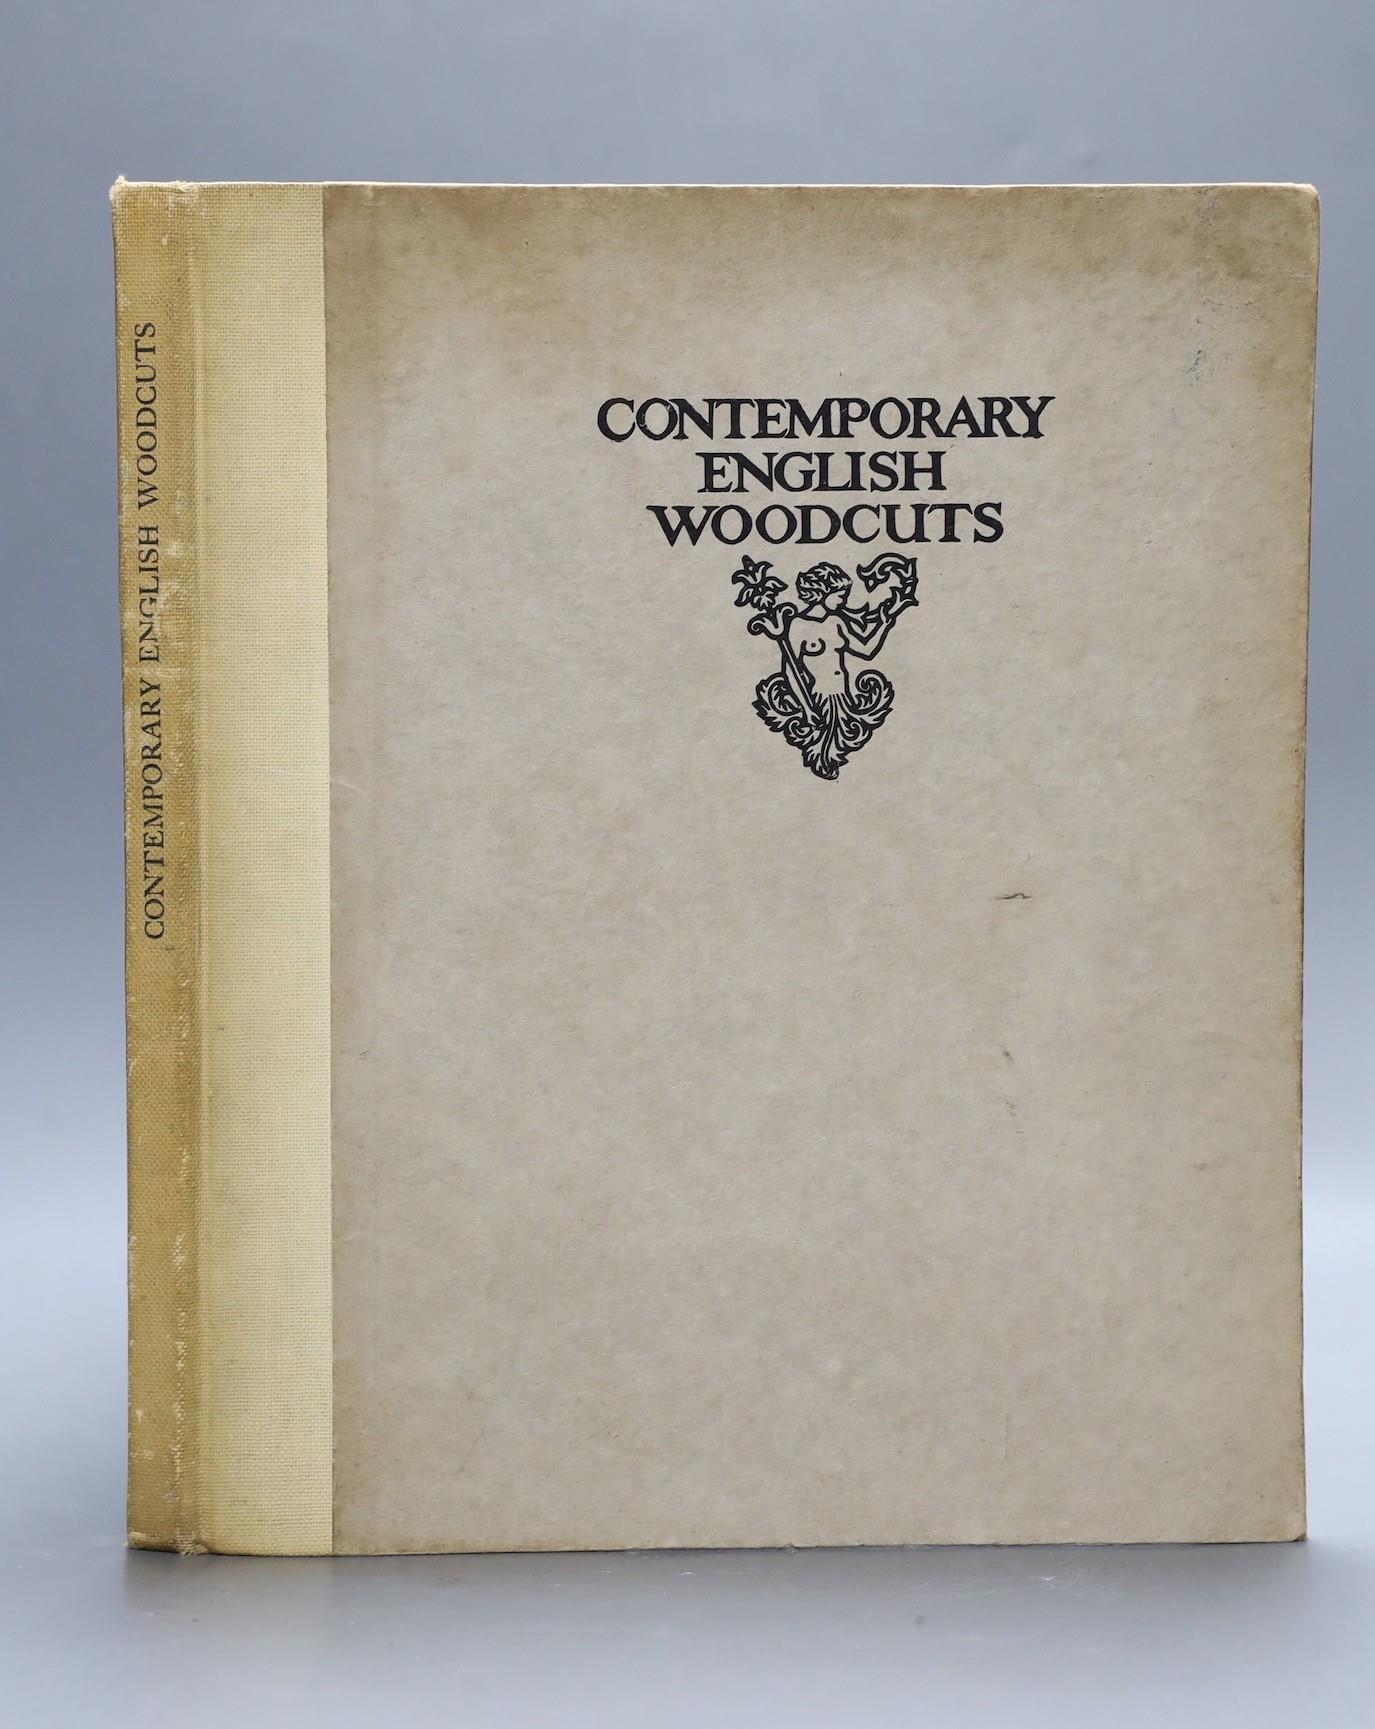 ° ° Dodgson, Campbell - Contemporary English Woodcuts, one of 550, folio, original half cloth,